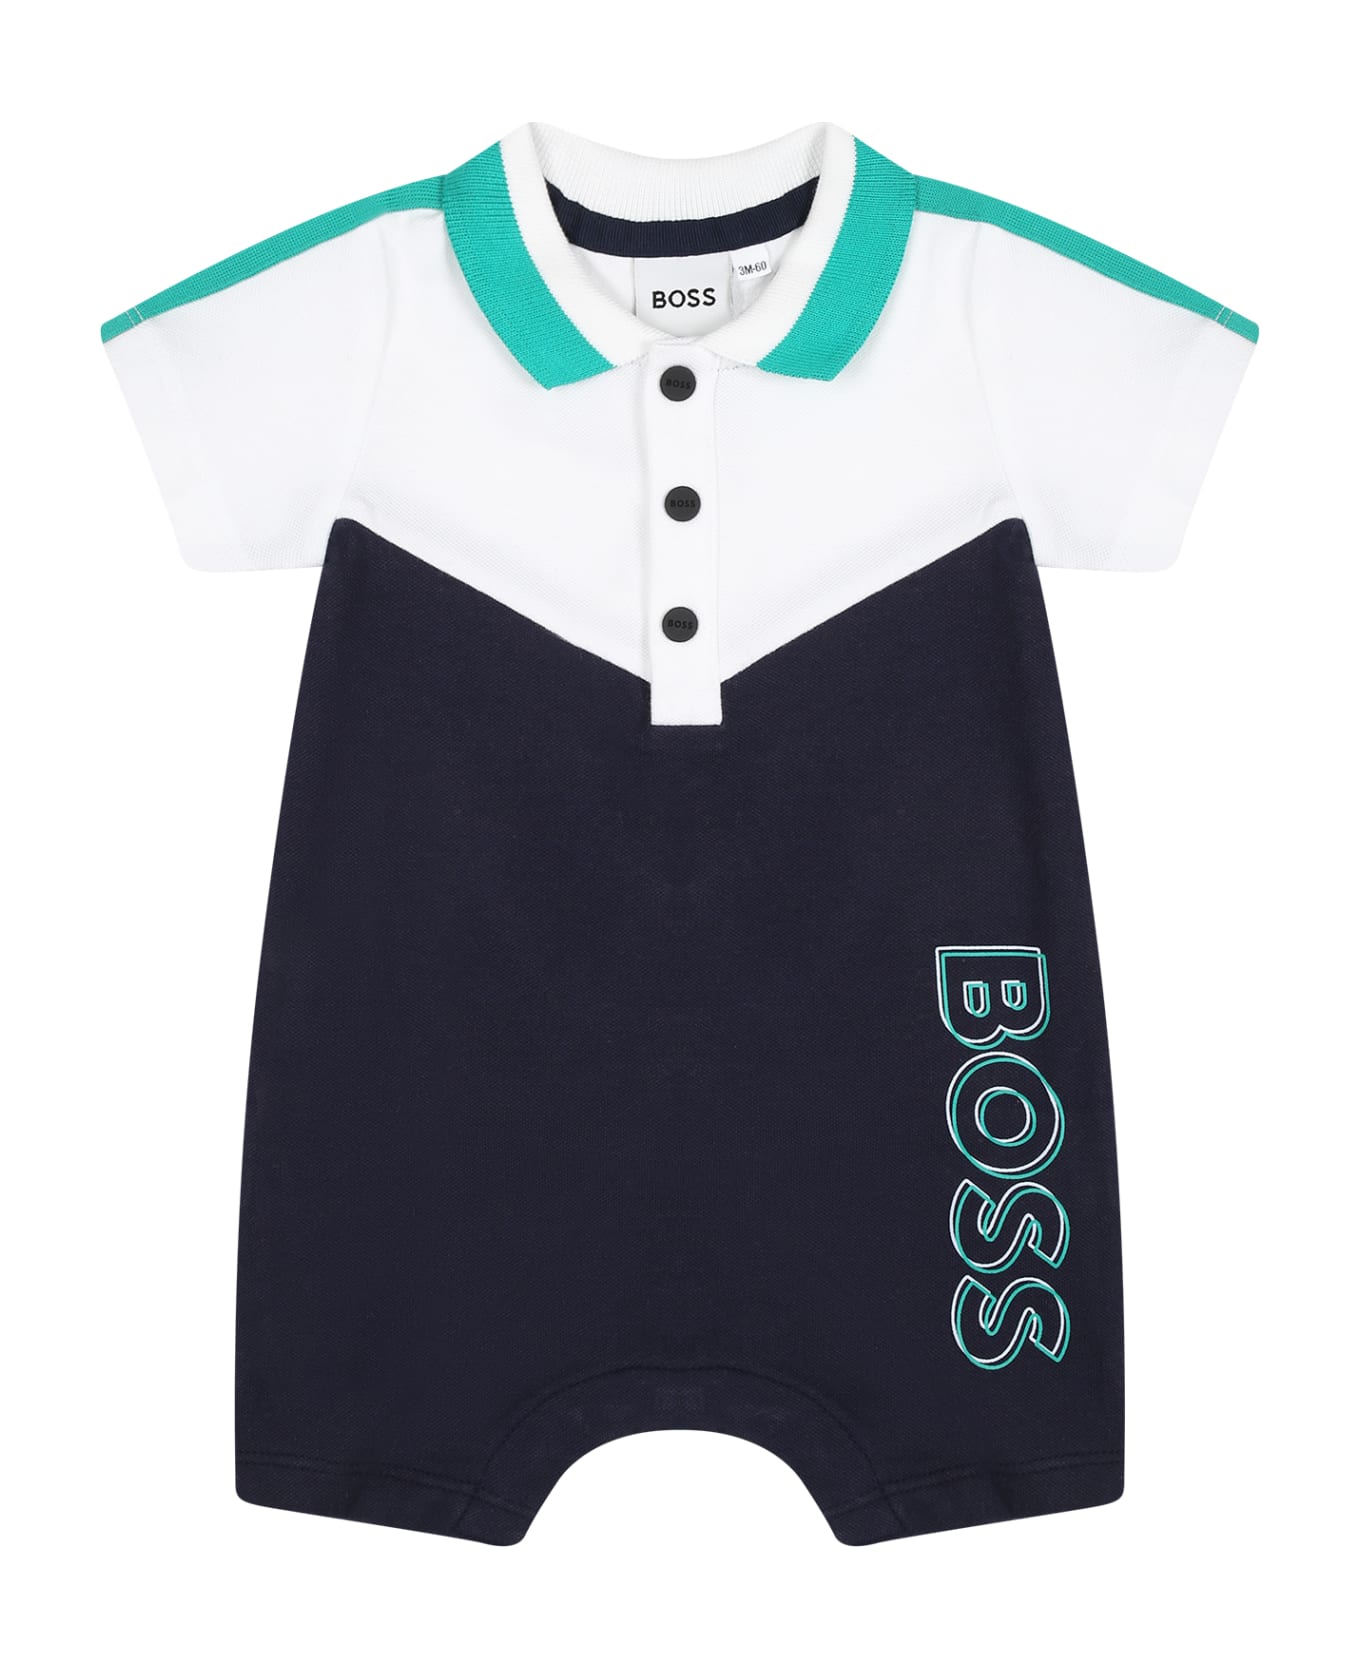 Hugo Boss Blue Romper For Baby Boy With Logo - Blue